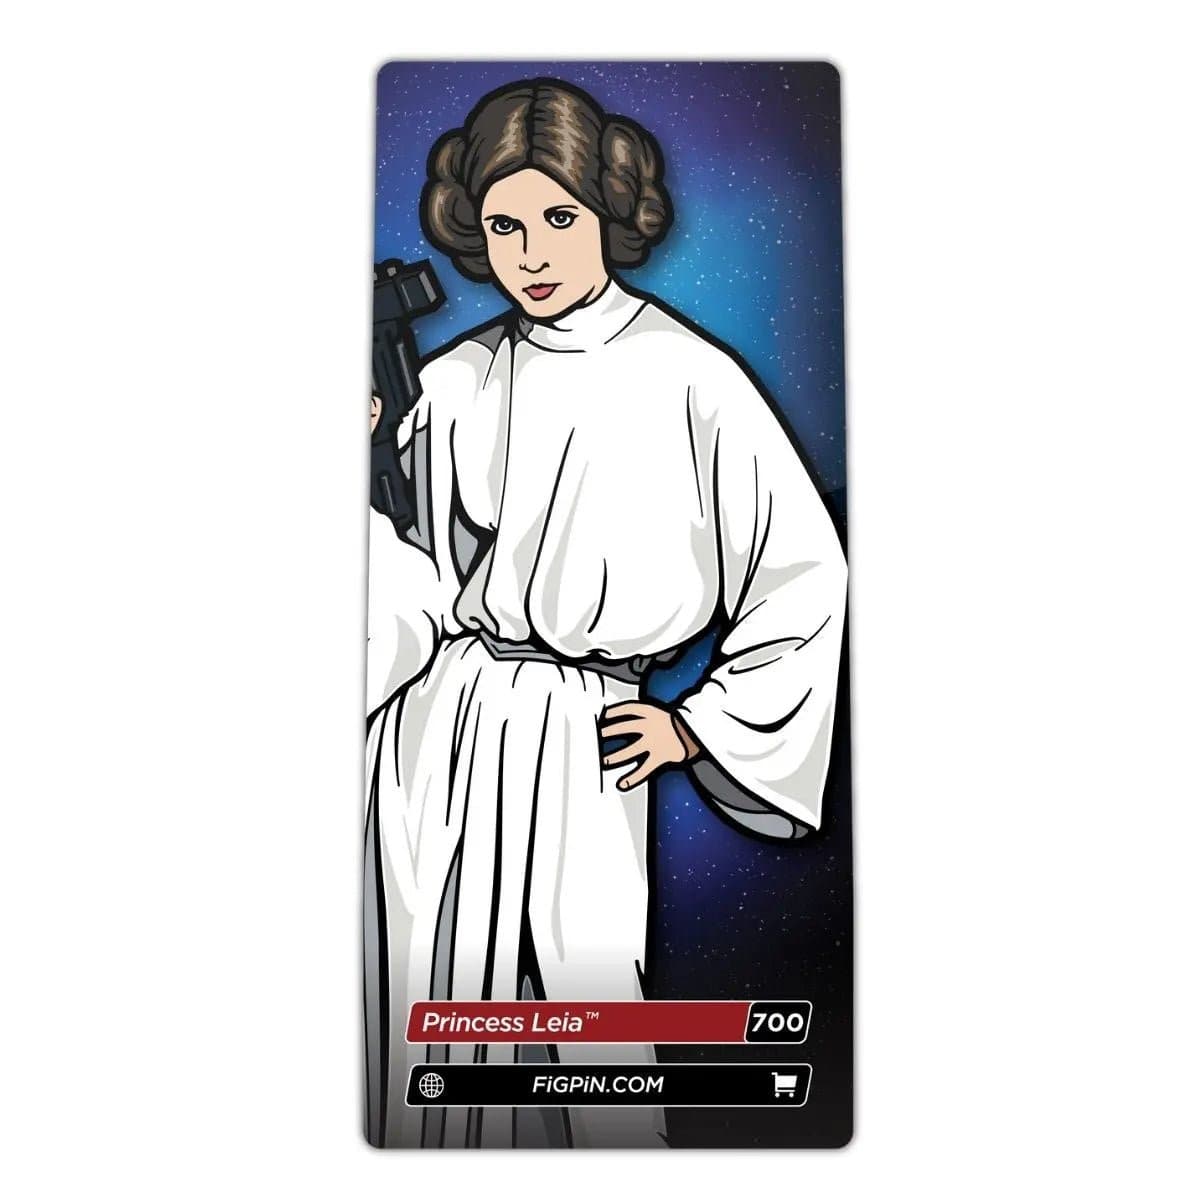 Star Wars: A New Hope Princess Leia FiGPiN 3-Inch Enamel Pin #700 - Simon's Collectibles